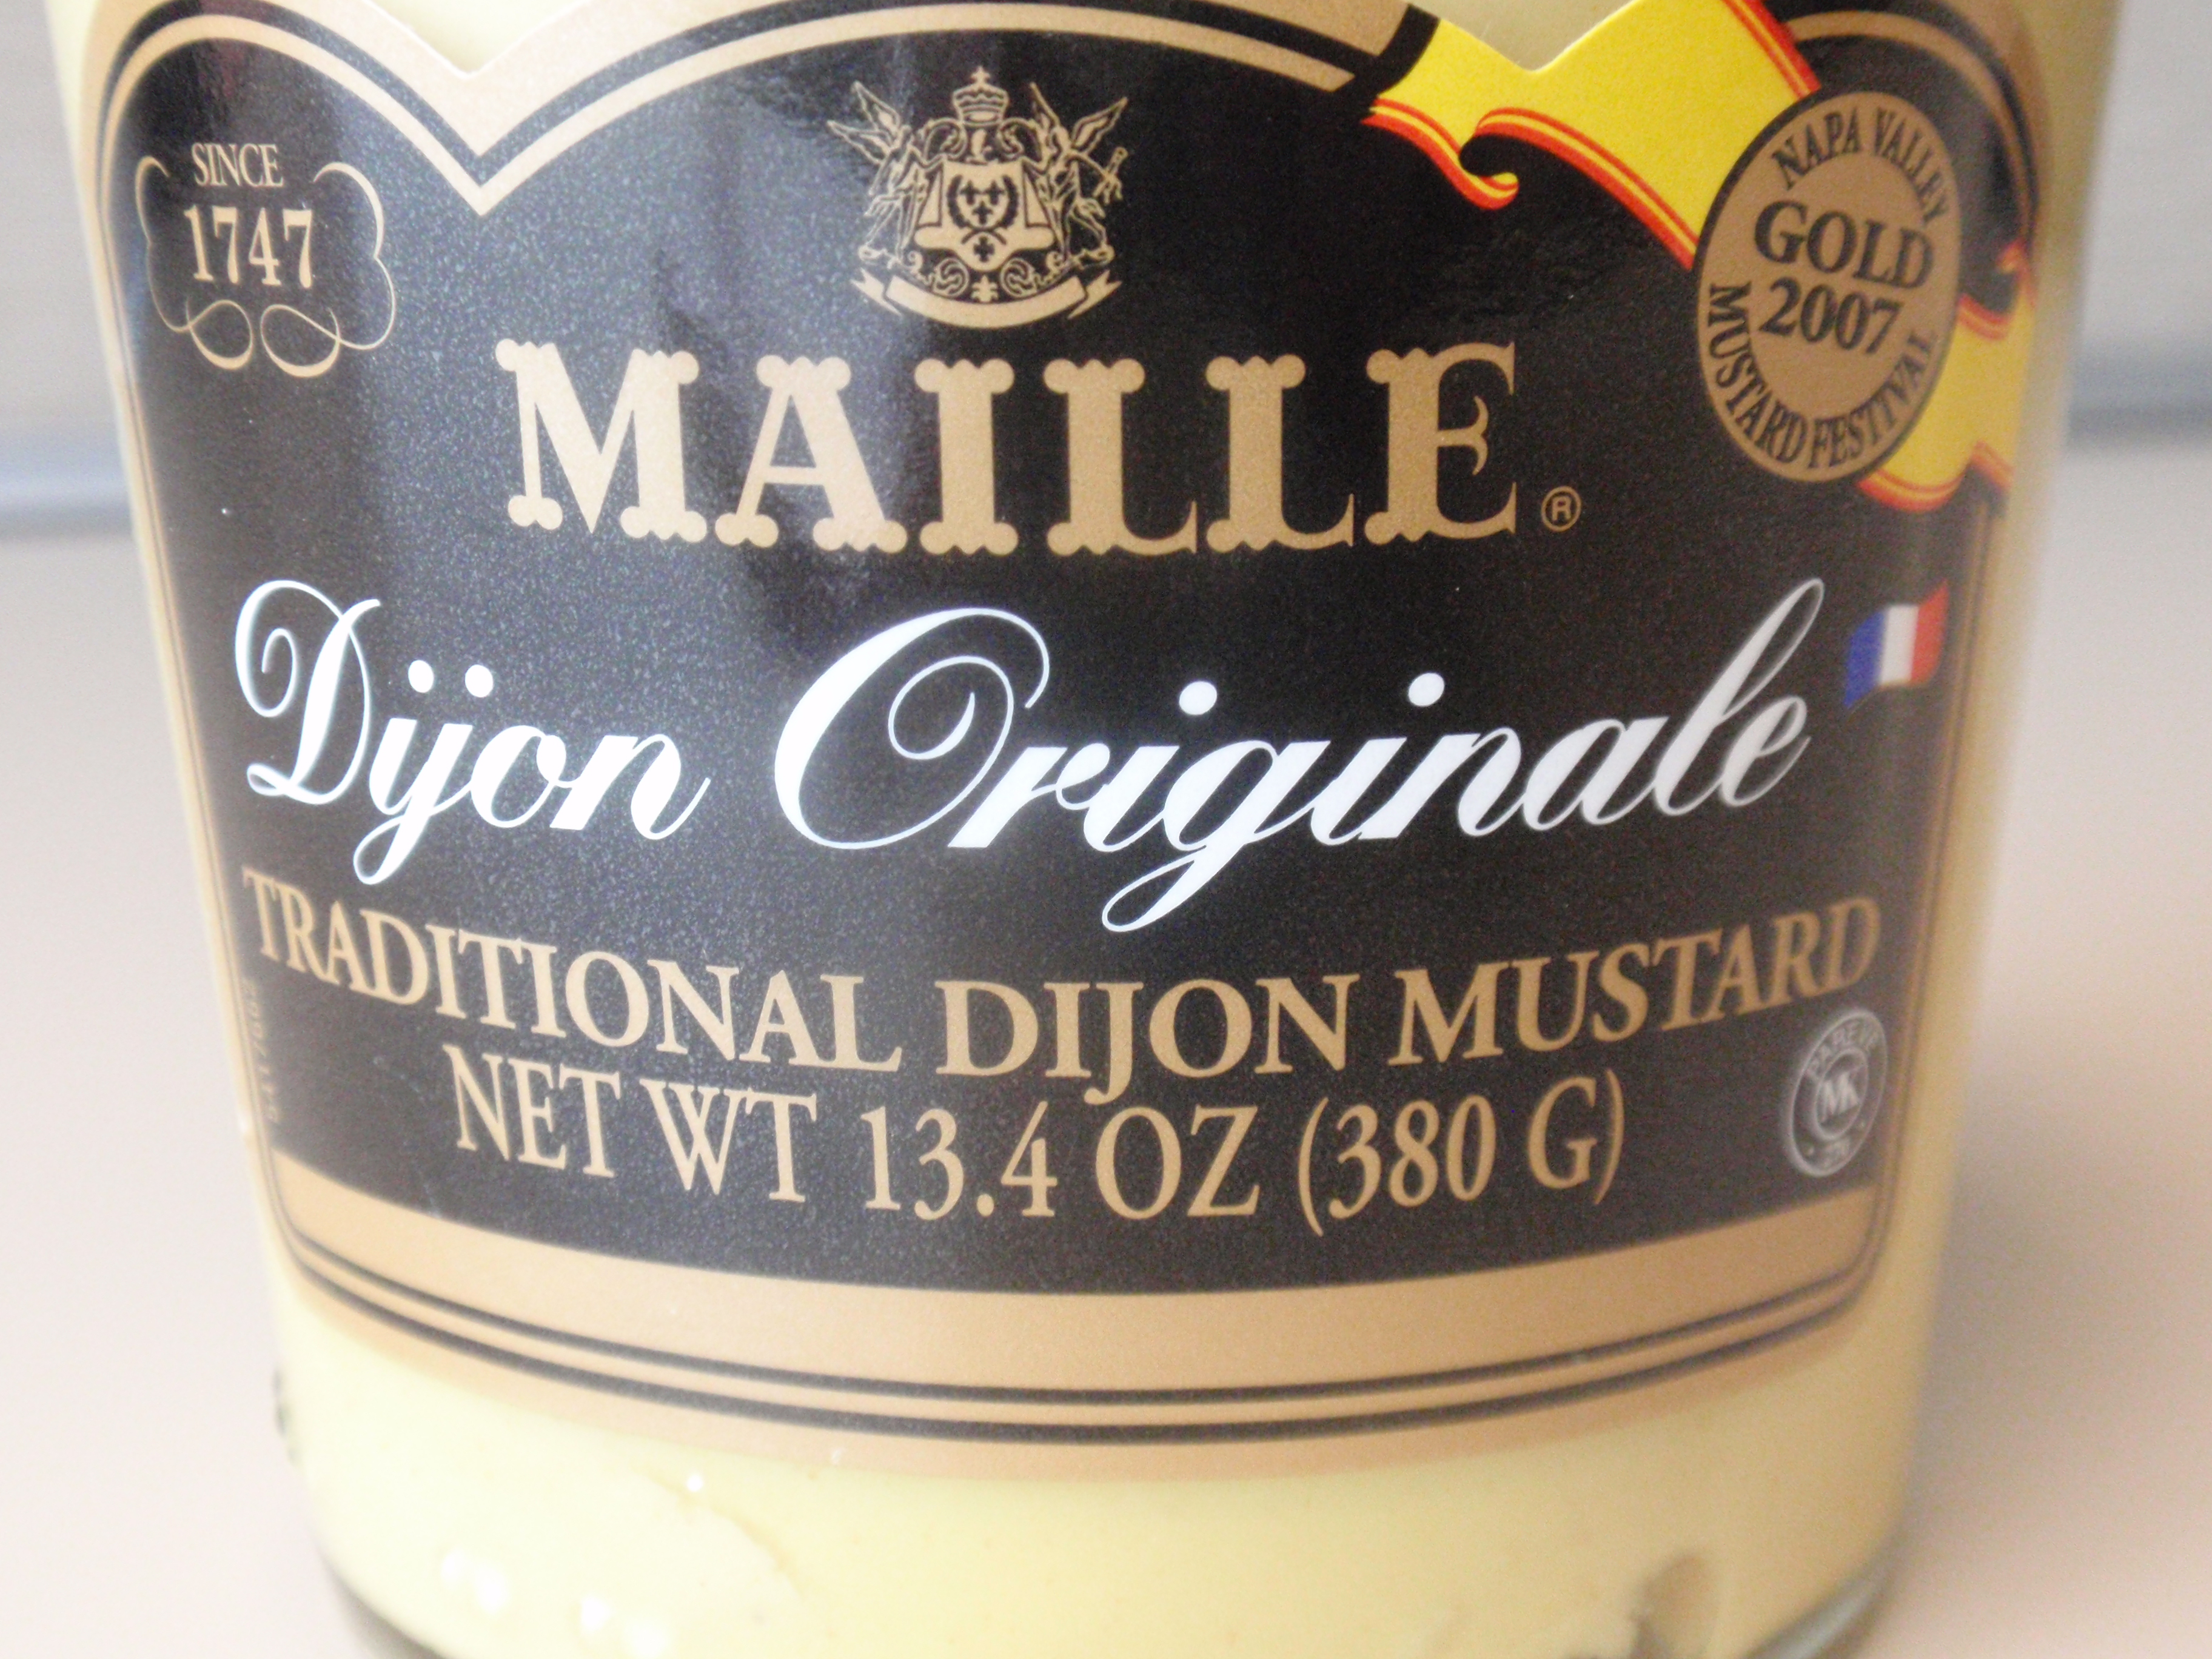 Hands down the best Dijon Mustard!  Originally $10, I got mine for $2.50!  